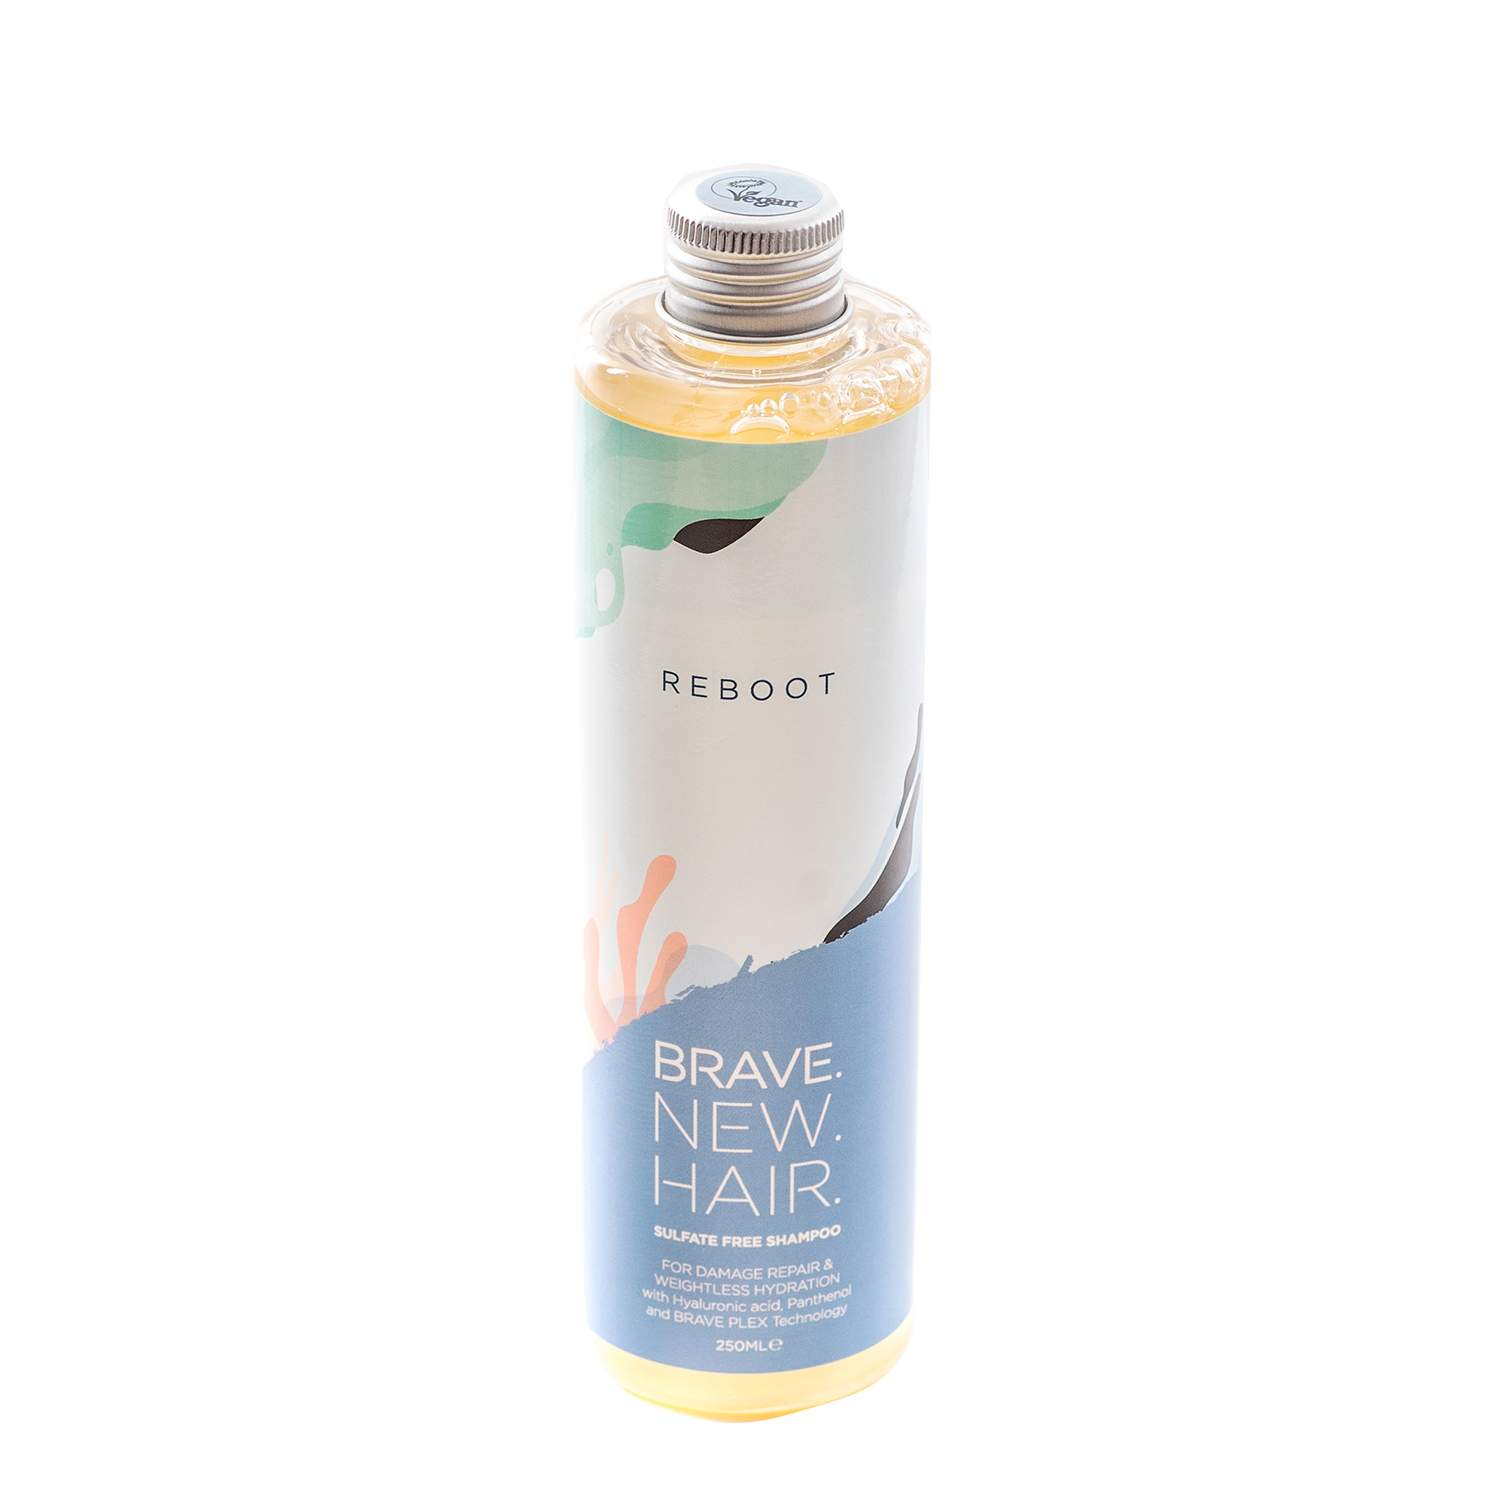 Brave.New.Hair Reboot Shampoo Brave.New.Hair Reboot Shampoo 1